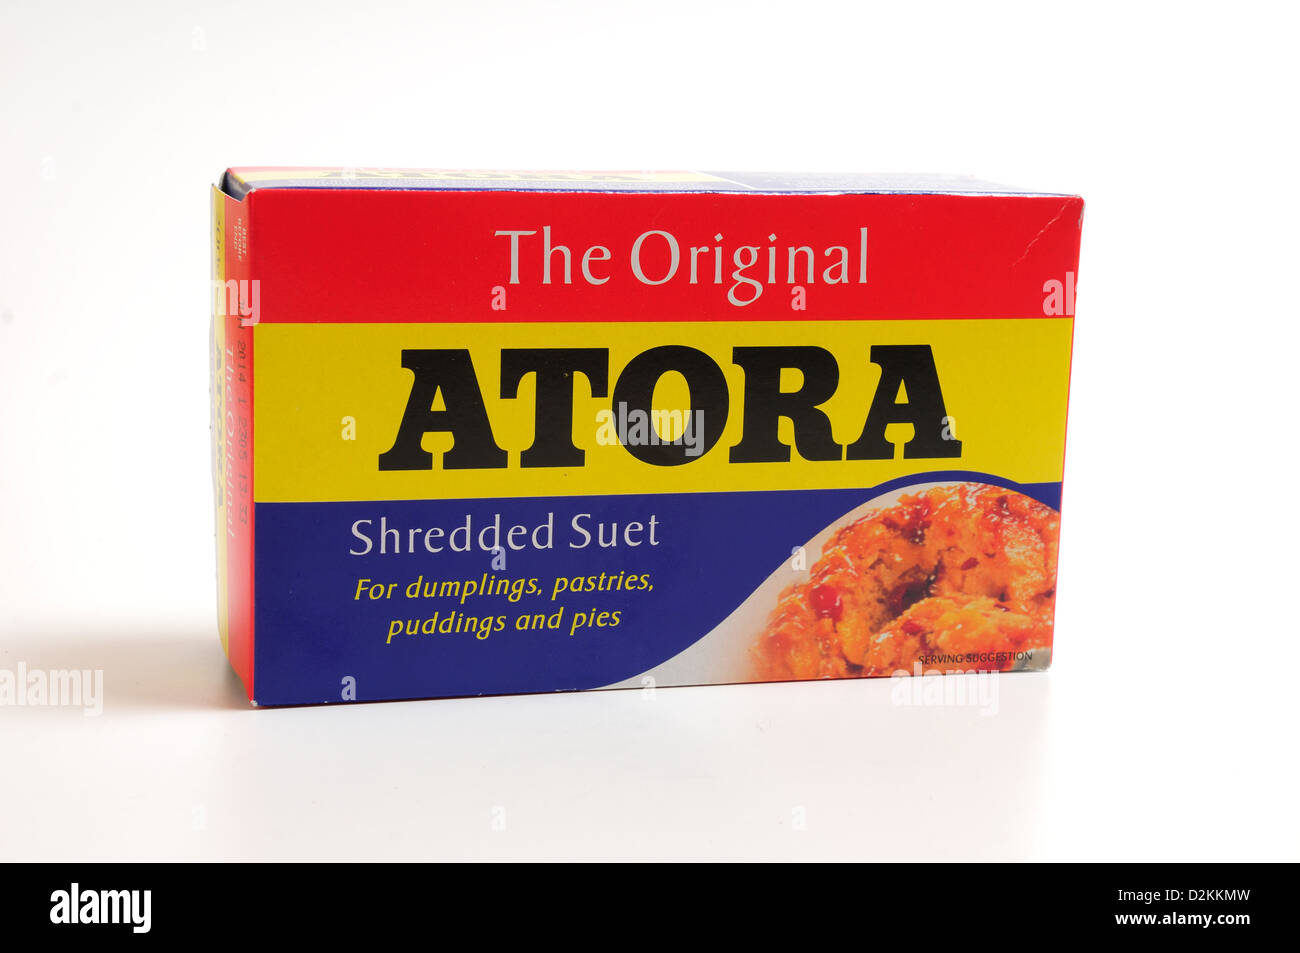 Atora,The Original Shredded Suet Stock Photo - Alamy